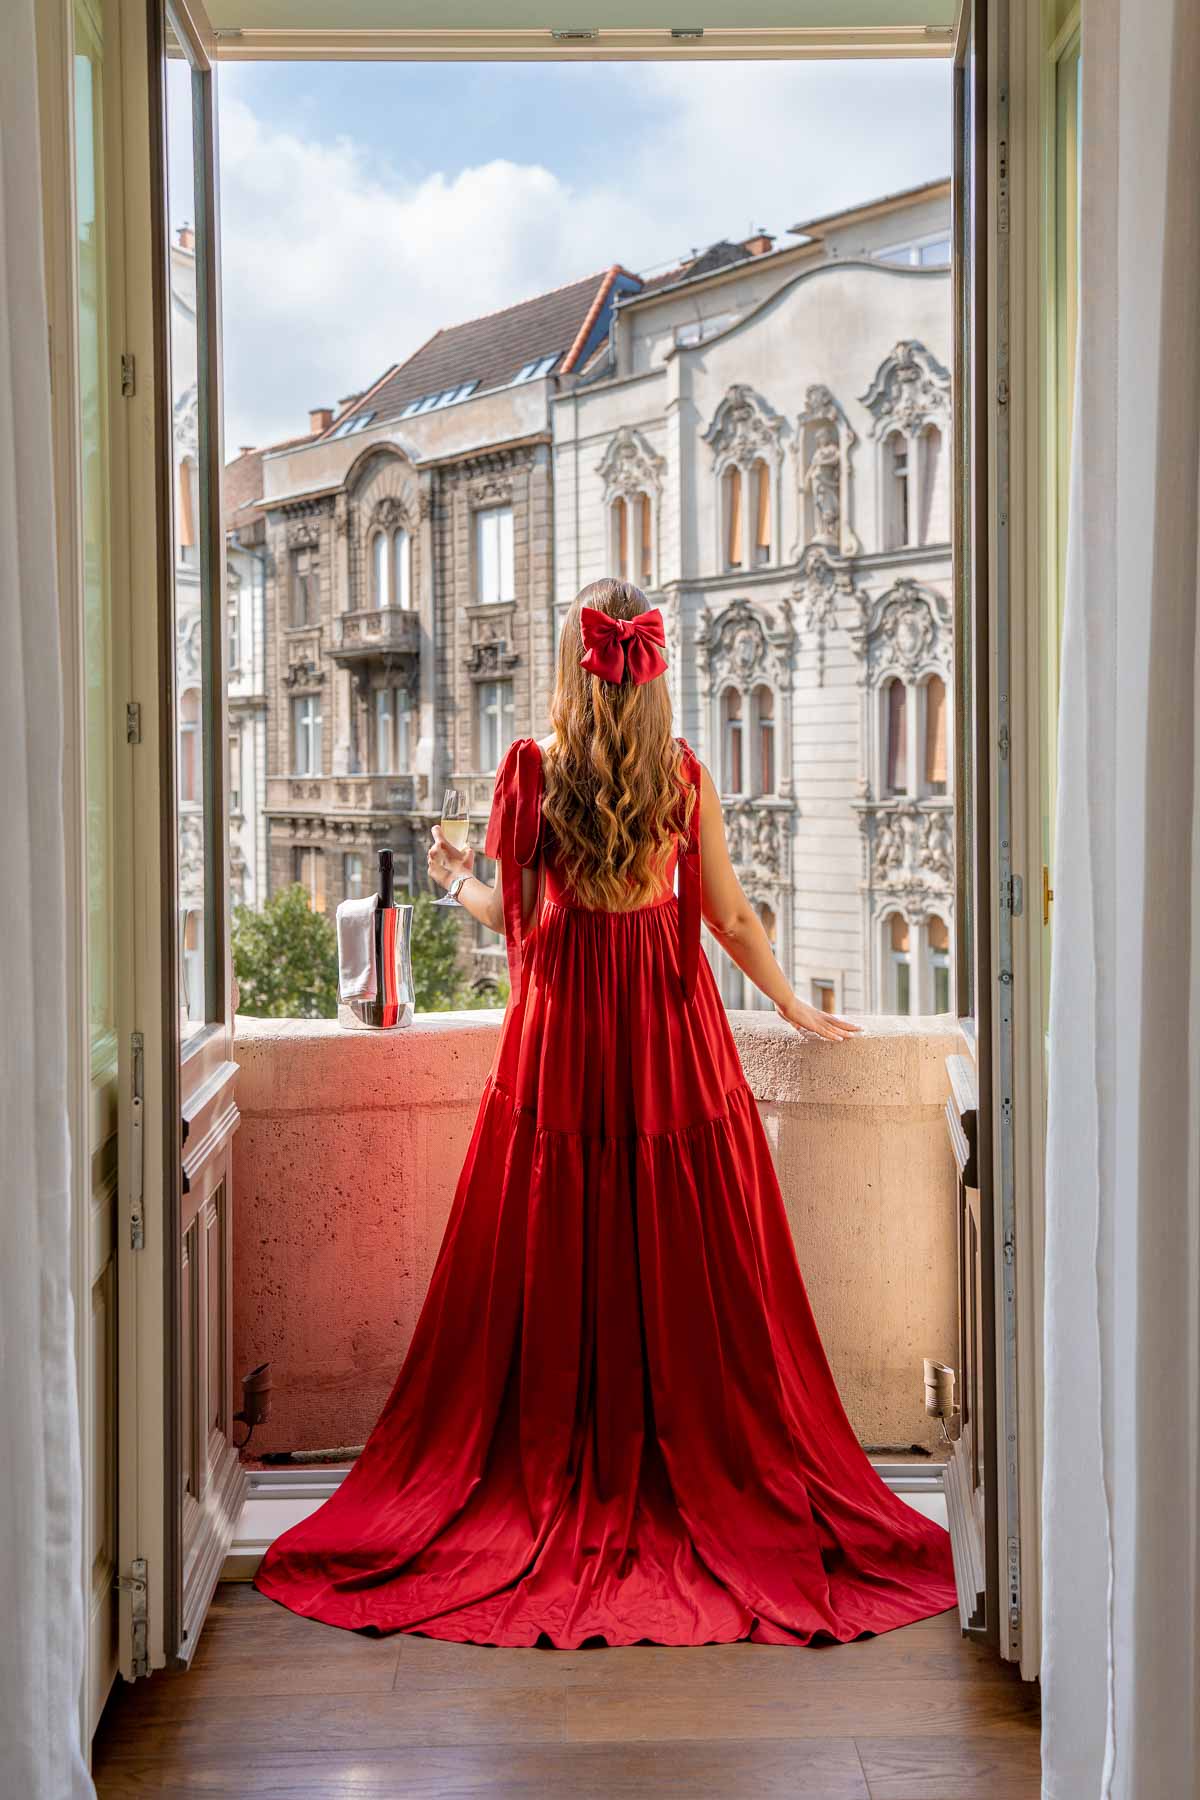 Girl on a balcony at Matild Palace